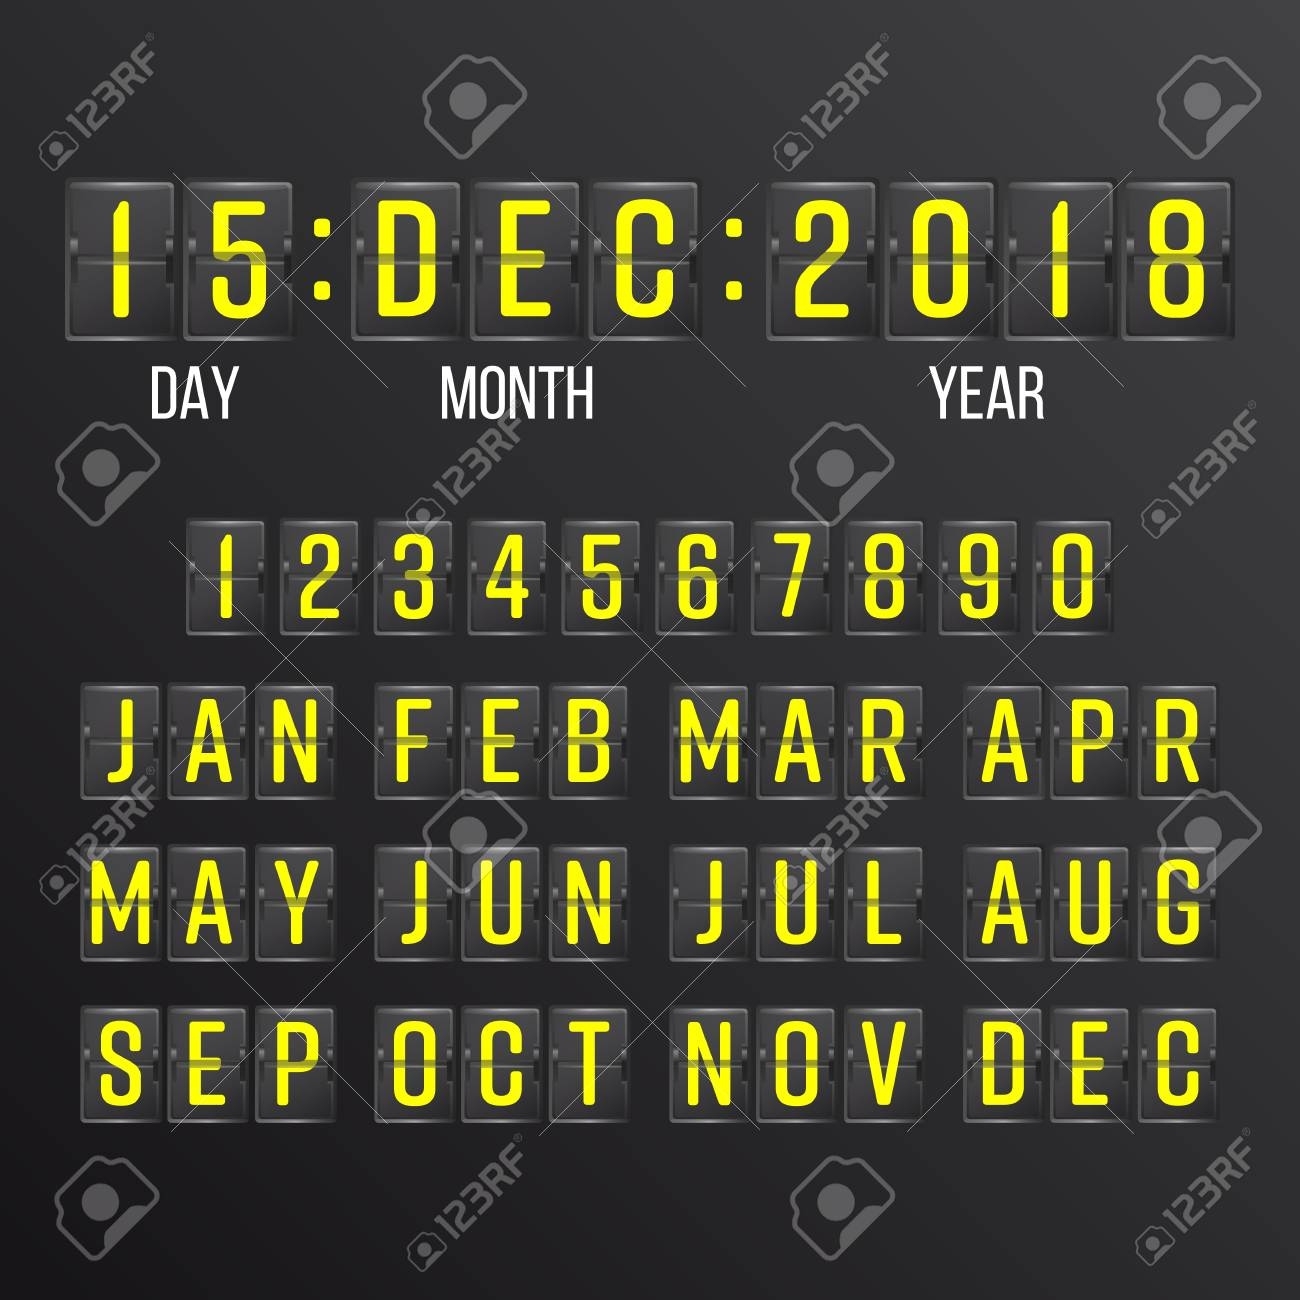 Flip Countdown Timer Vector. Flip Scoreboard Digital Calendar 2 Year Countdown Calendar